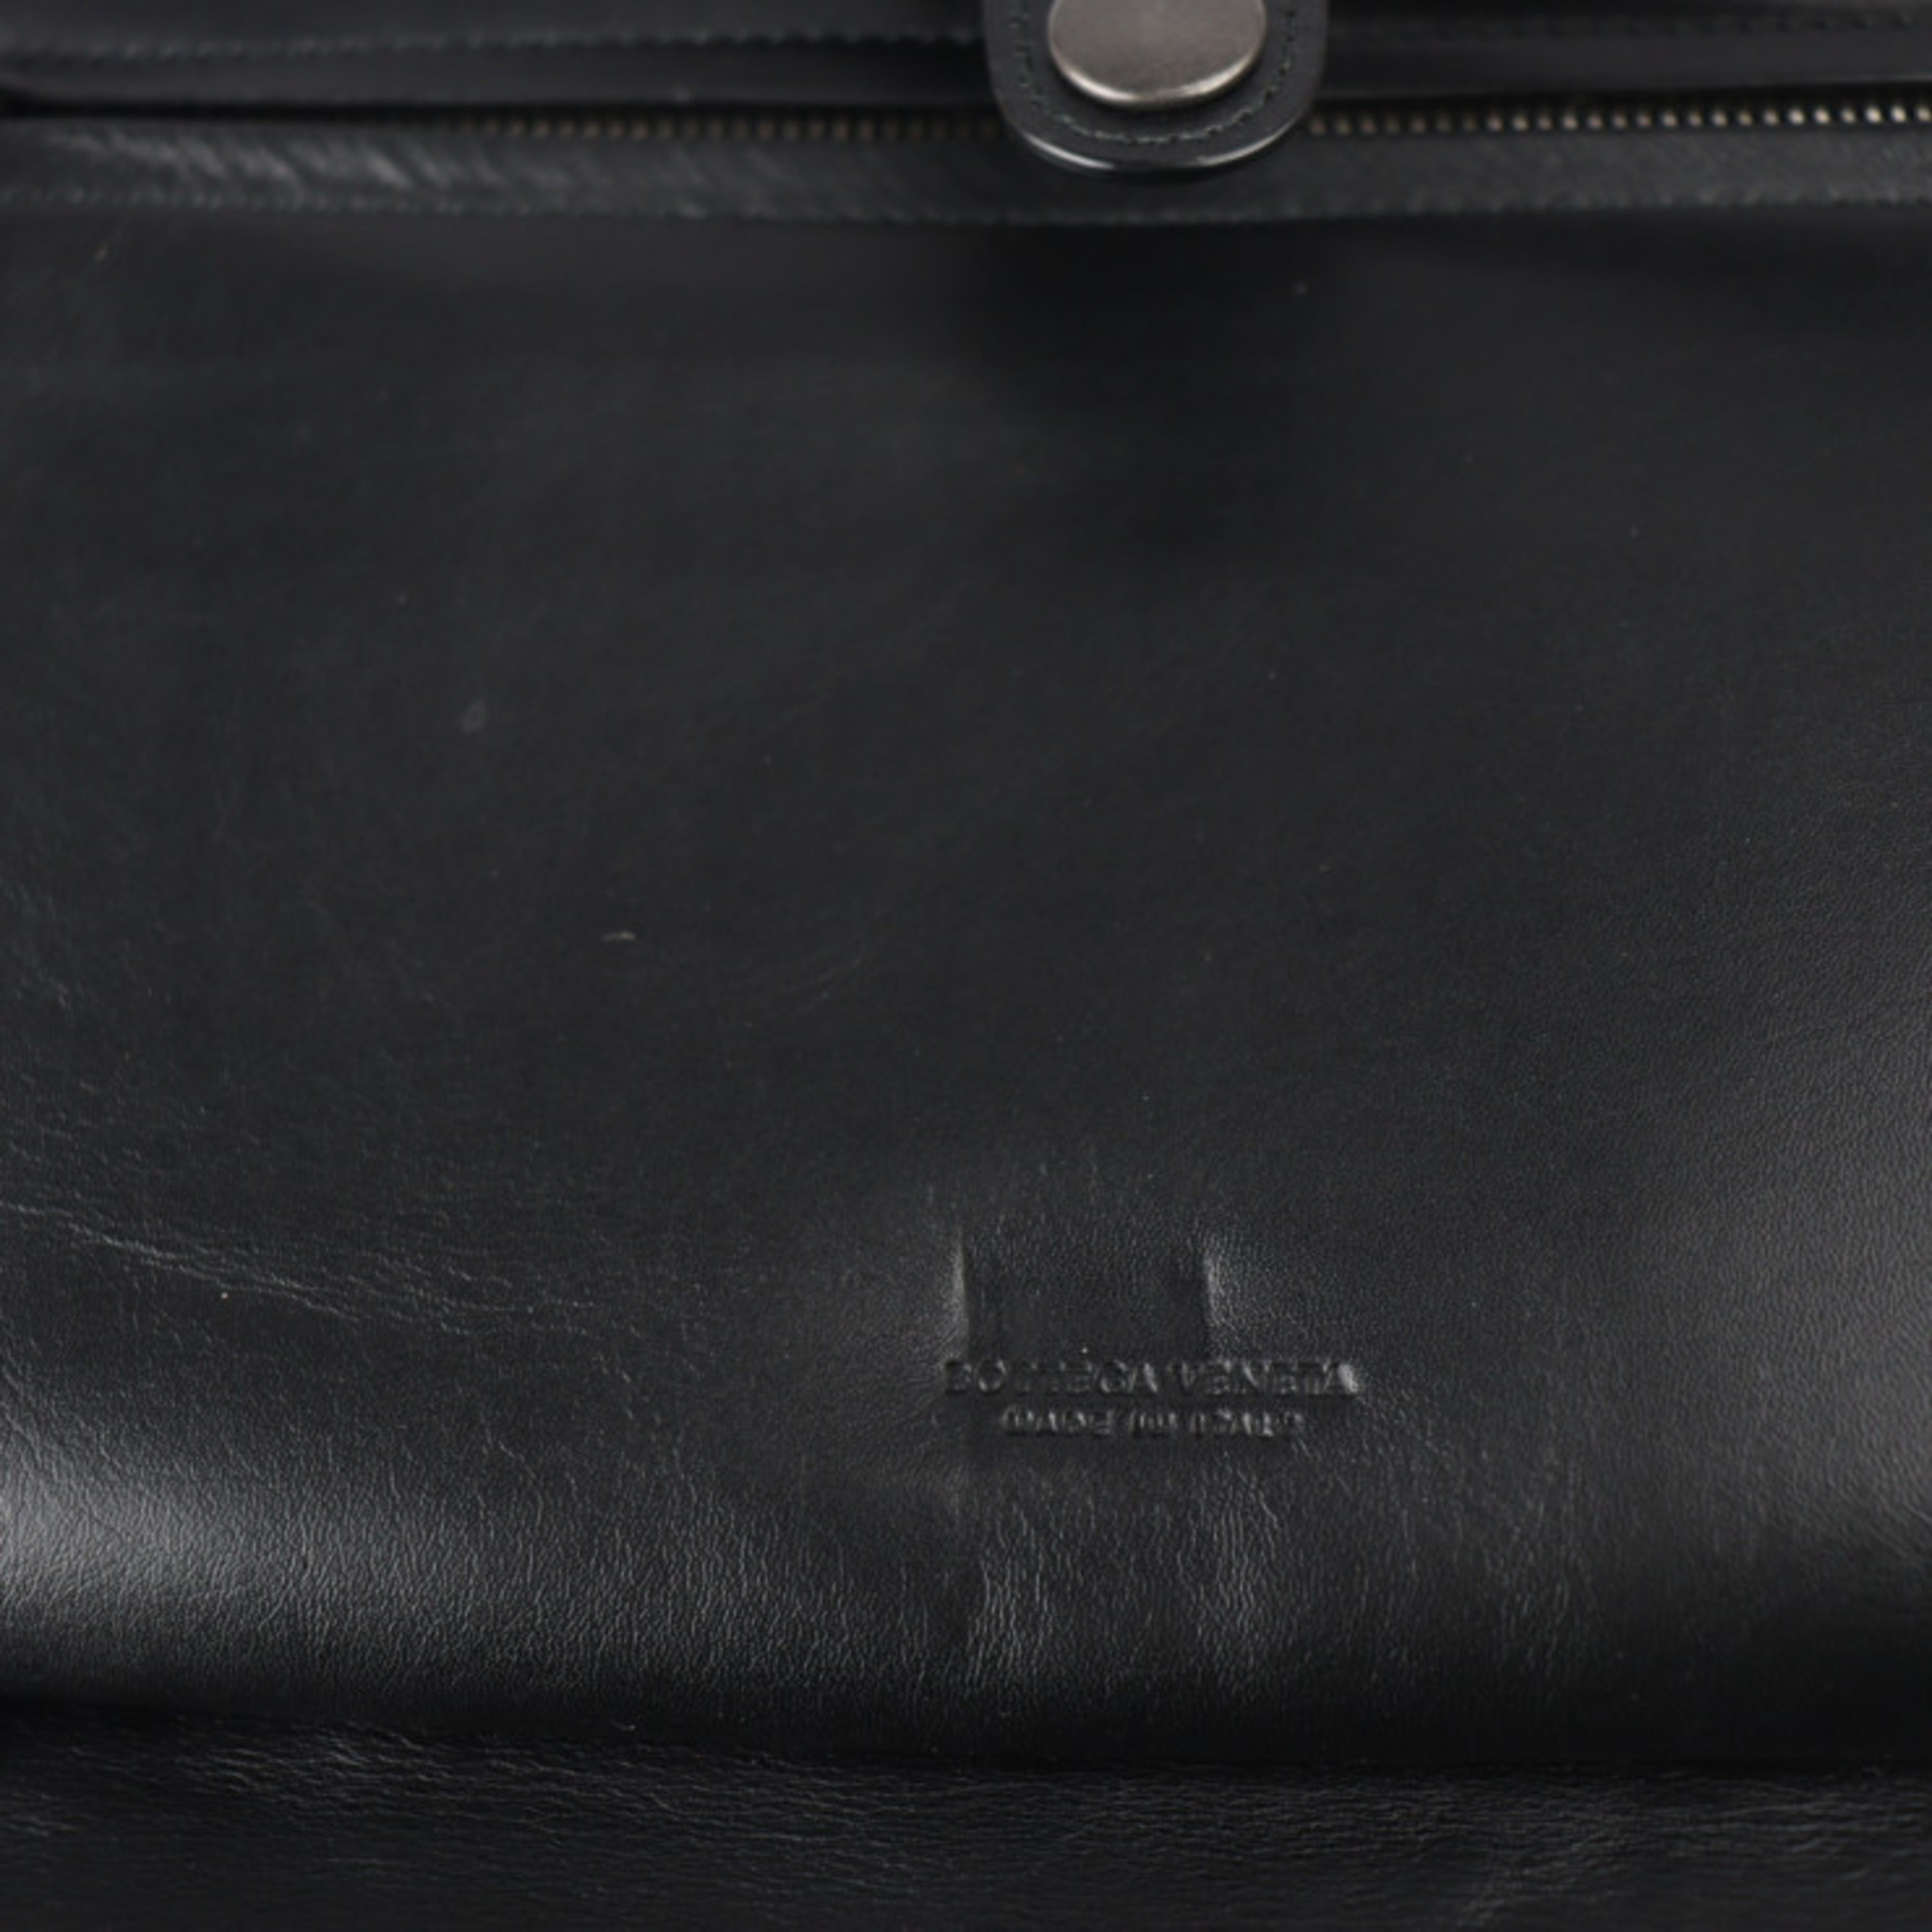 BOTTEGA VENETA Continental Wallet Intrecciato Second Bag 302652 Calf Leather Black Clutch Purse Multi Case